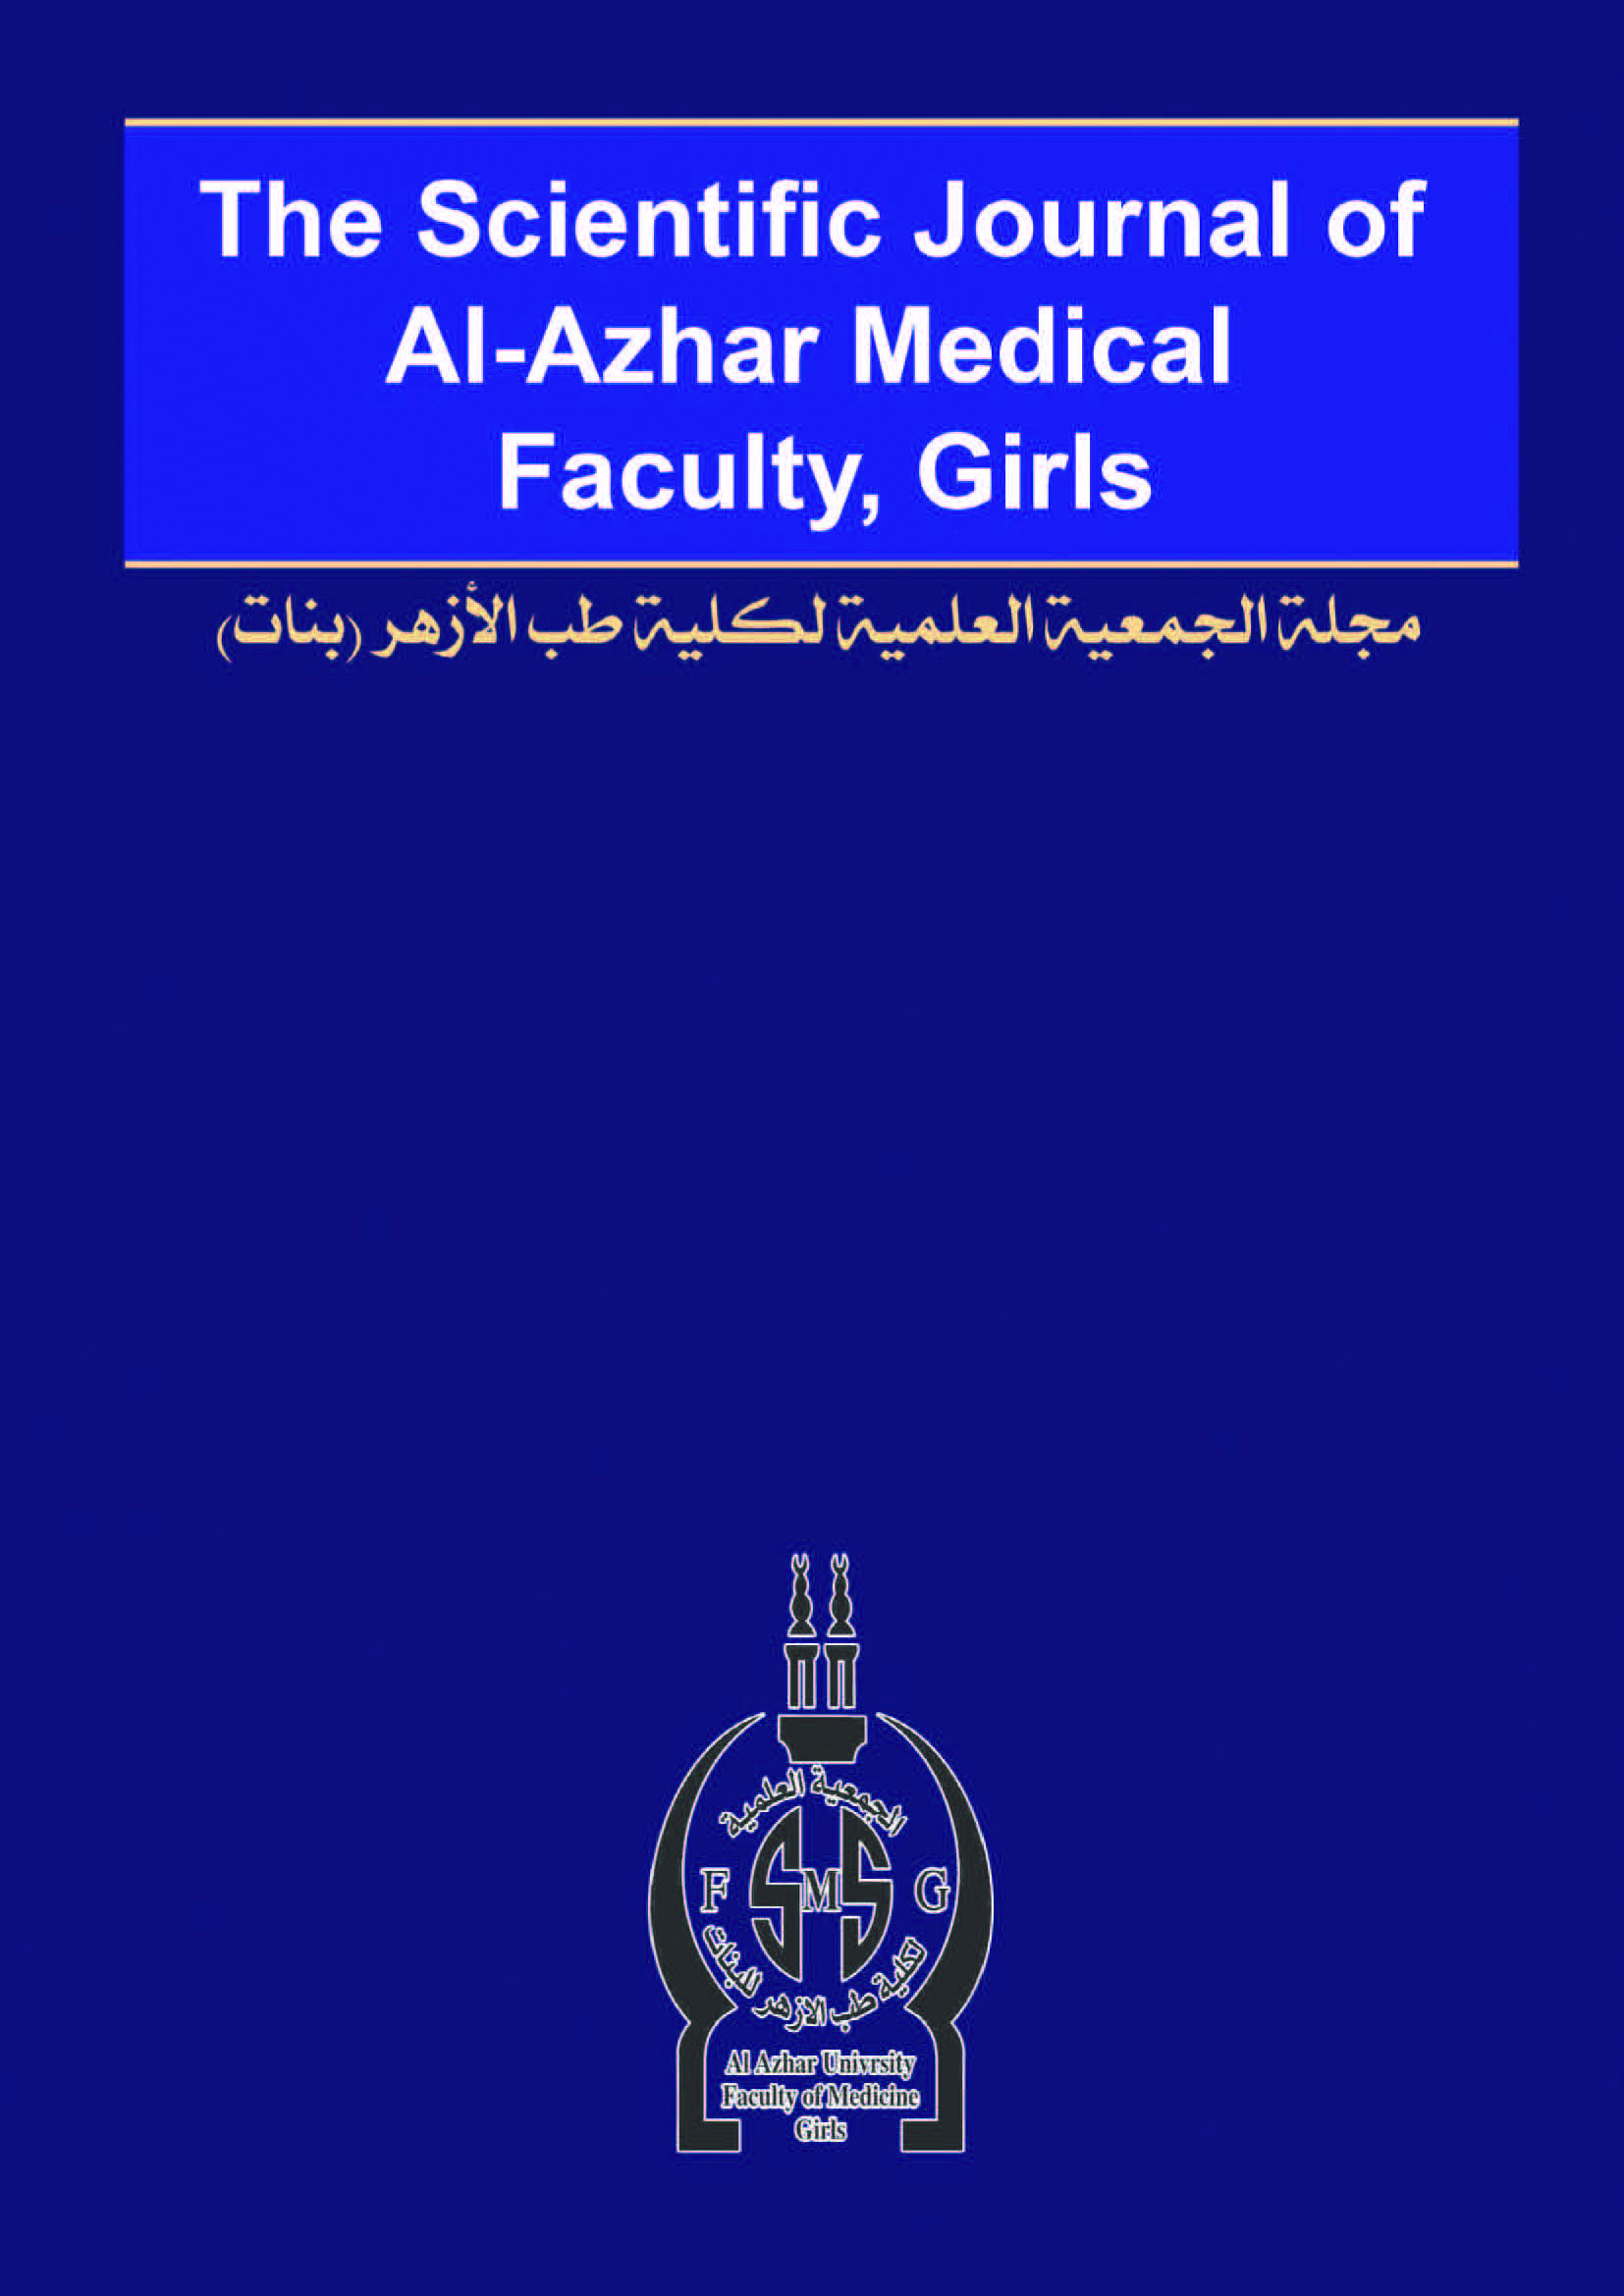 The Scientific Journal of Al-Azhar Medical Faculty, Girls